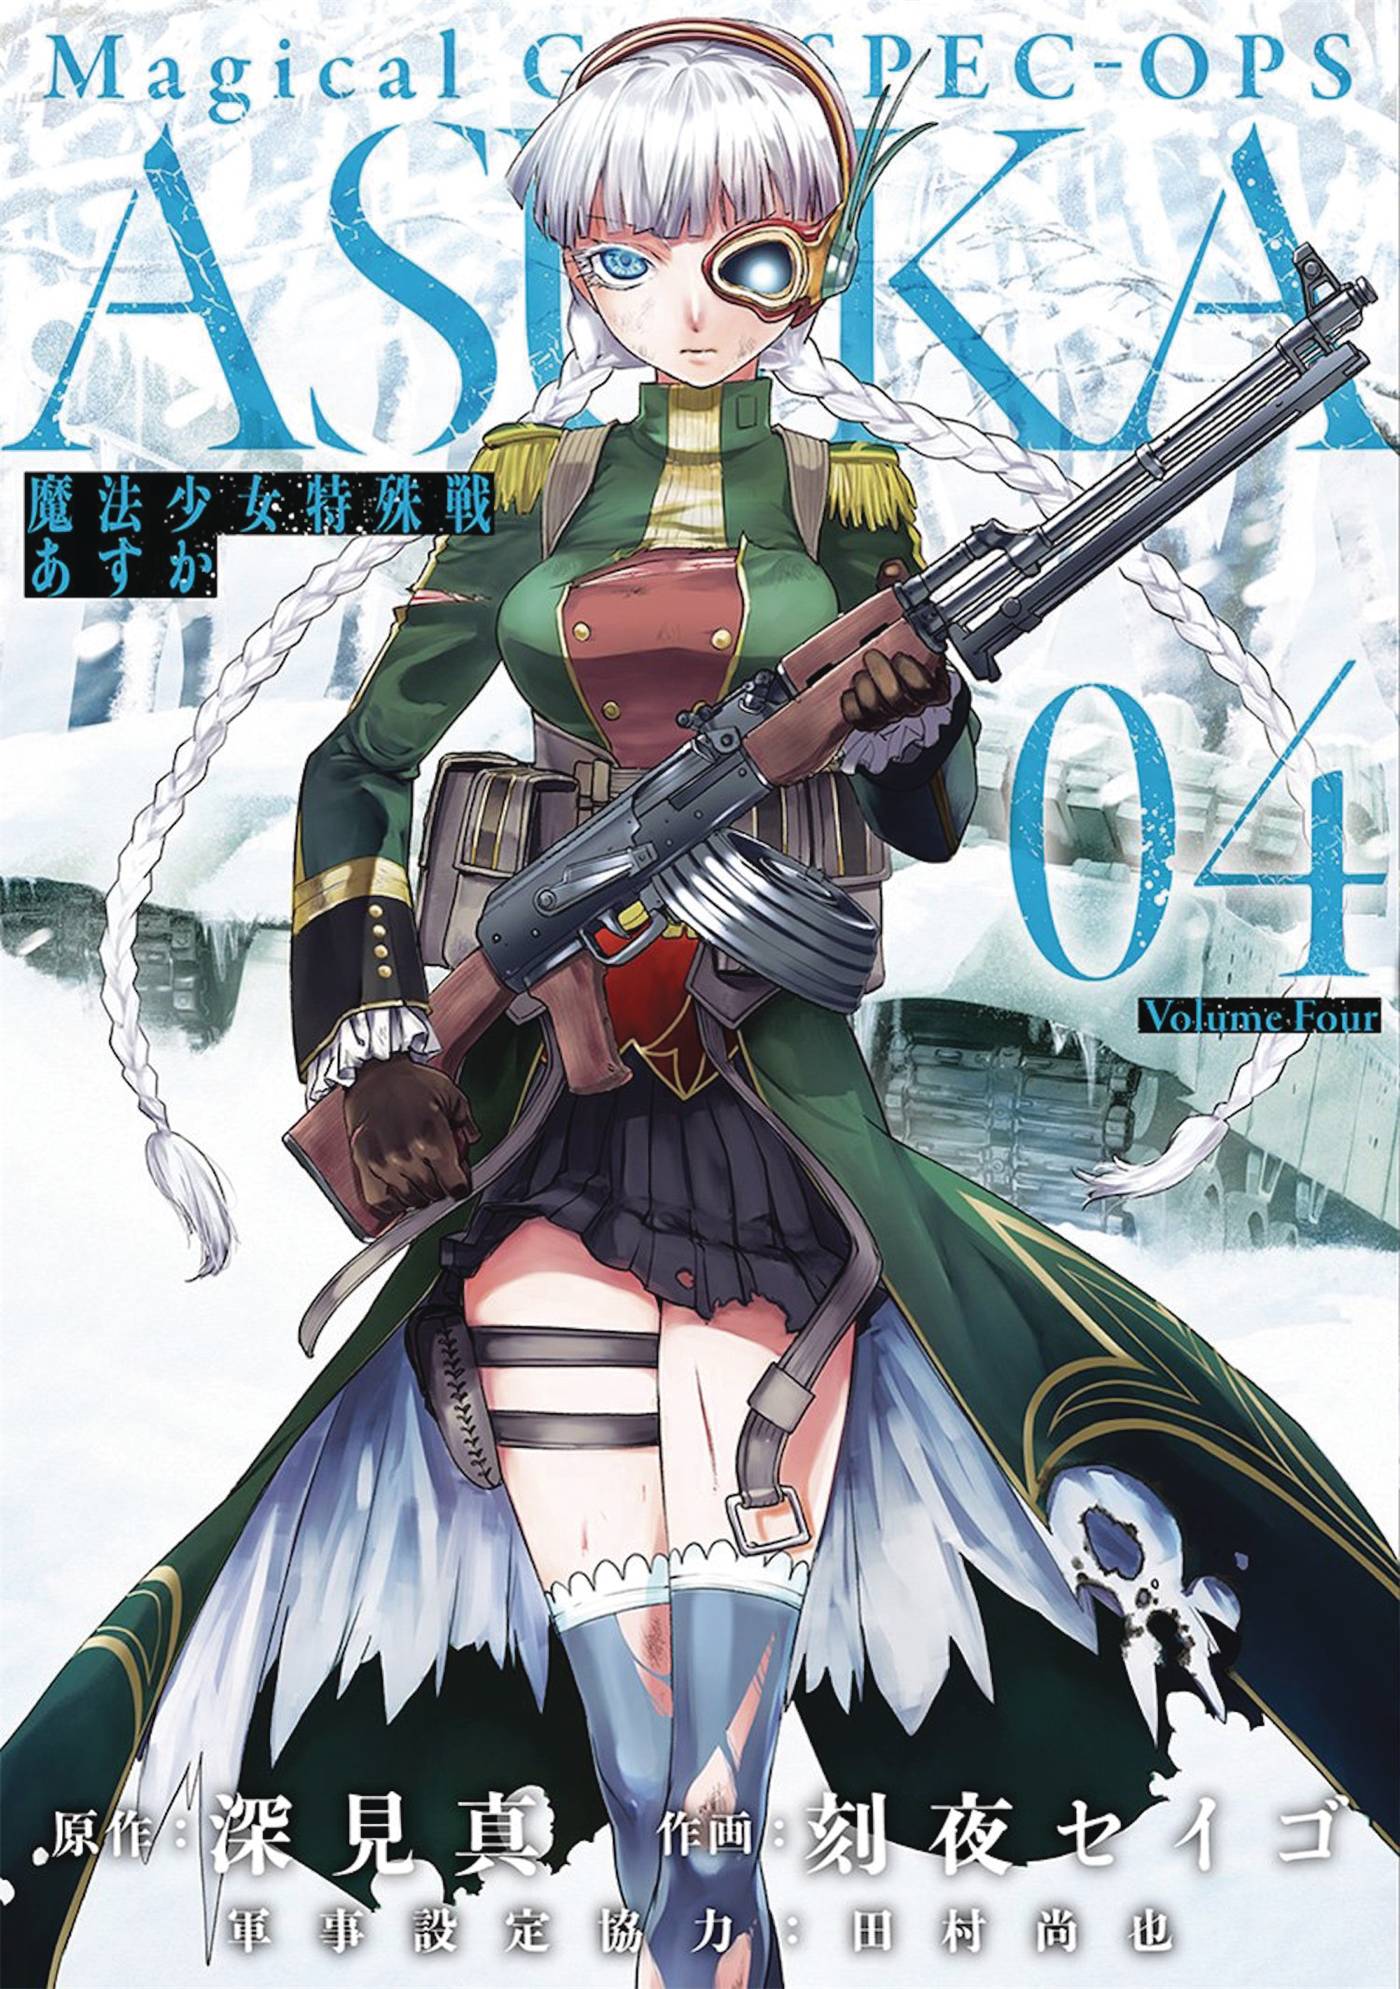 Magical Girl Special Ops Asuka Manga Volume 4 (Mature)